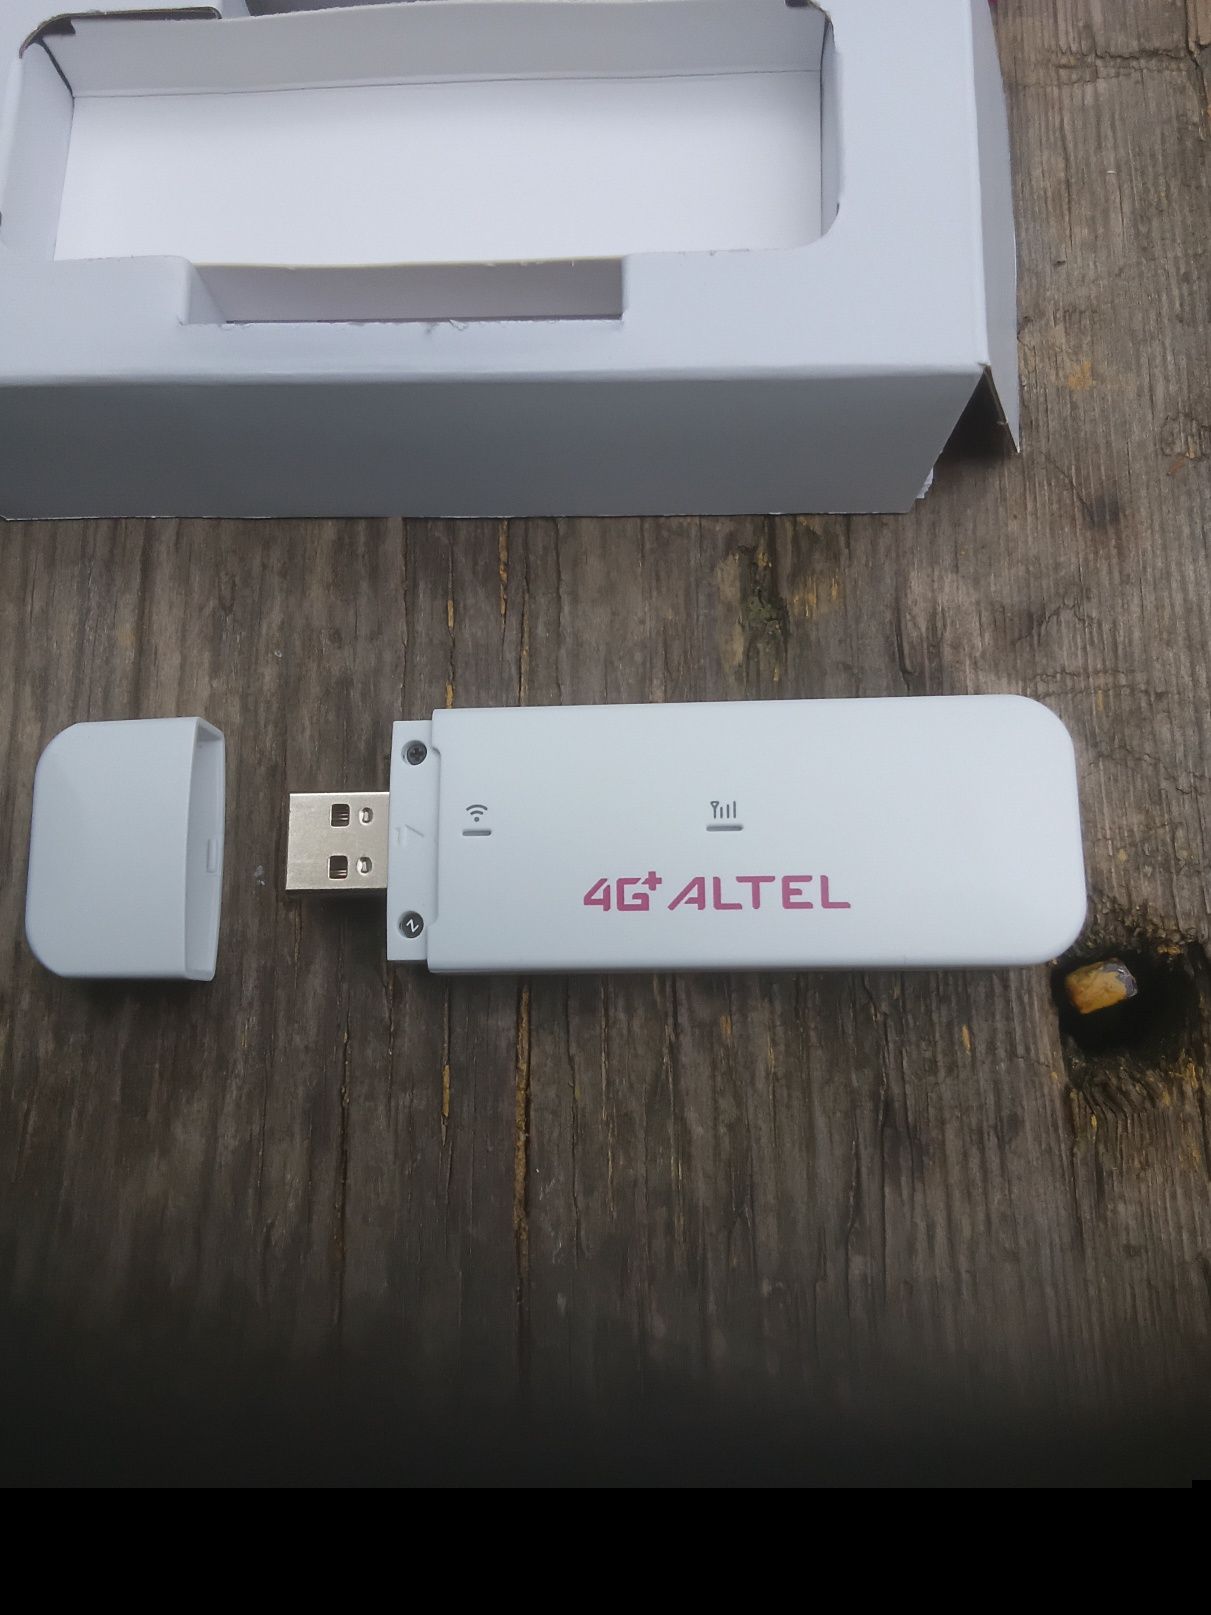 Алтел новый usb wifi 4G+ роутер модем вайфай